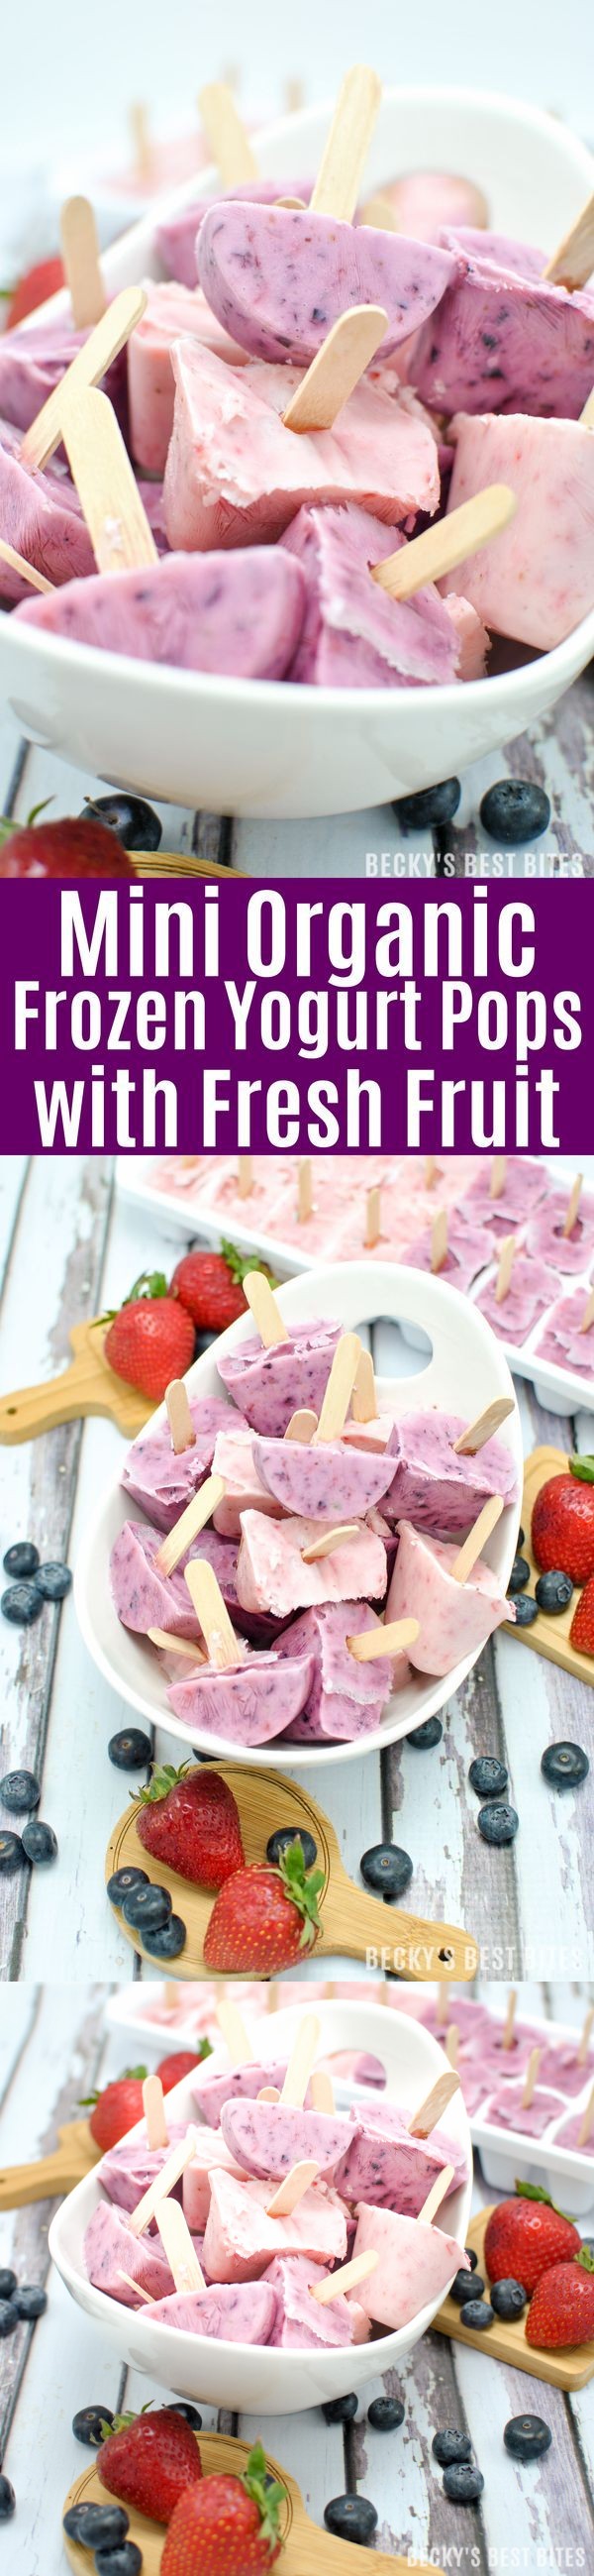 Mini Organic Frozen Yogurt Pops with Fresh Fruit